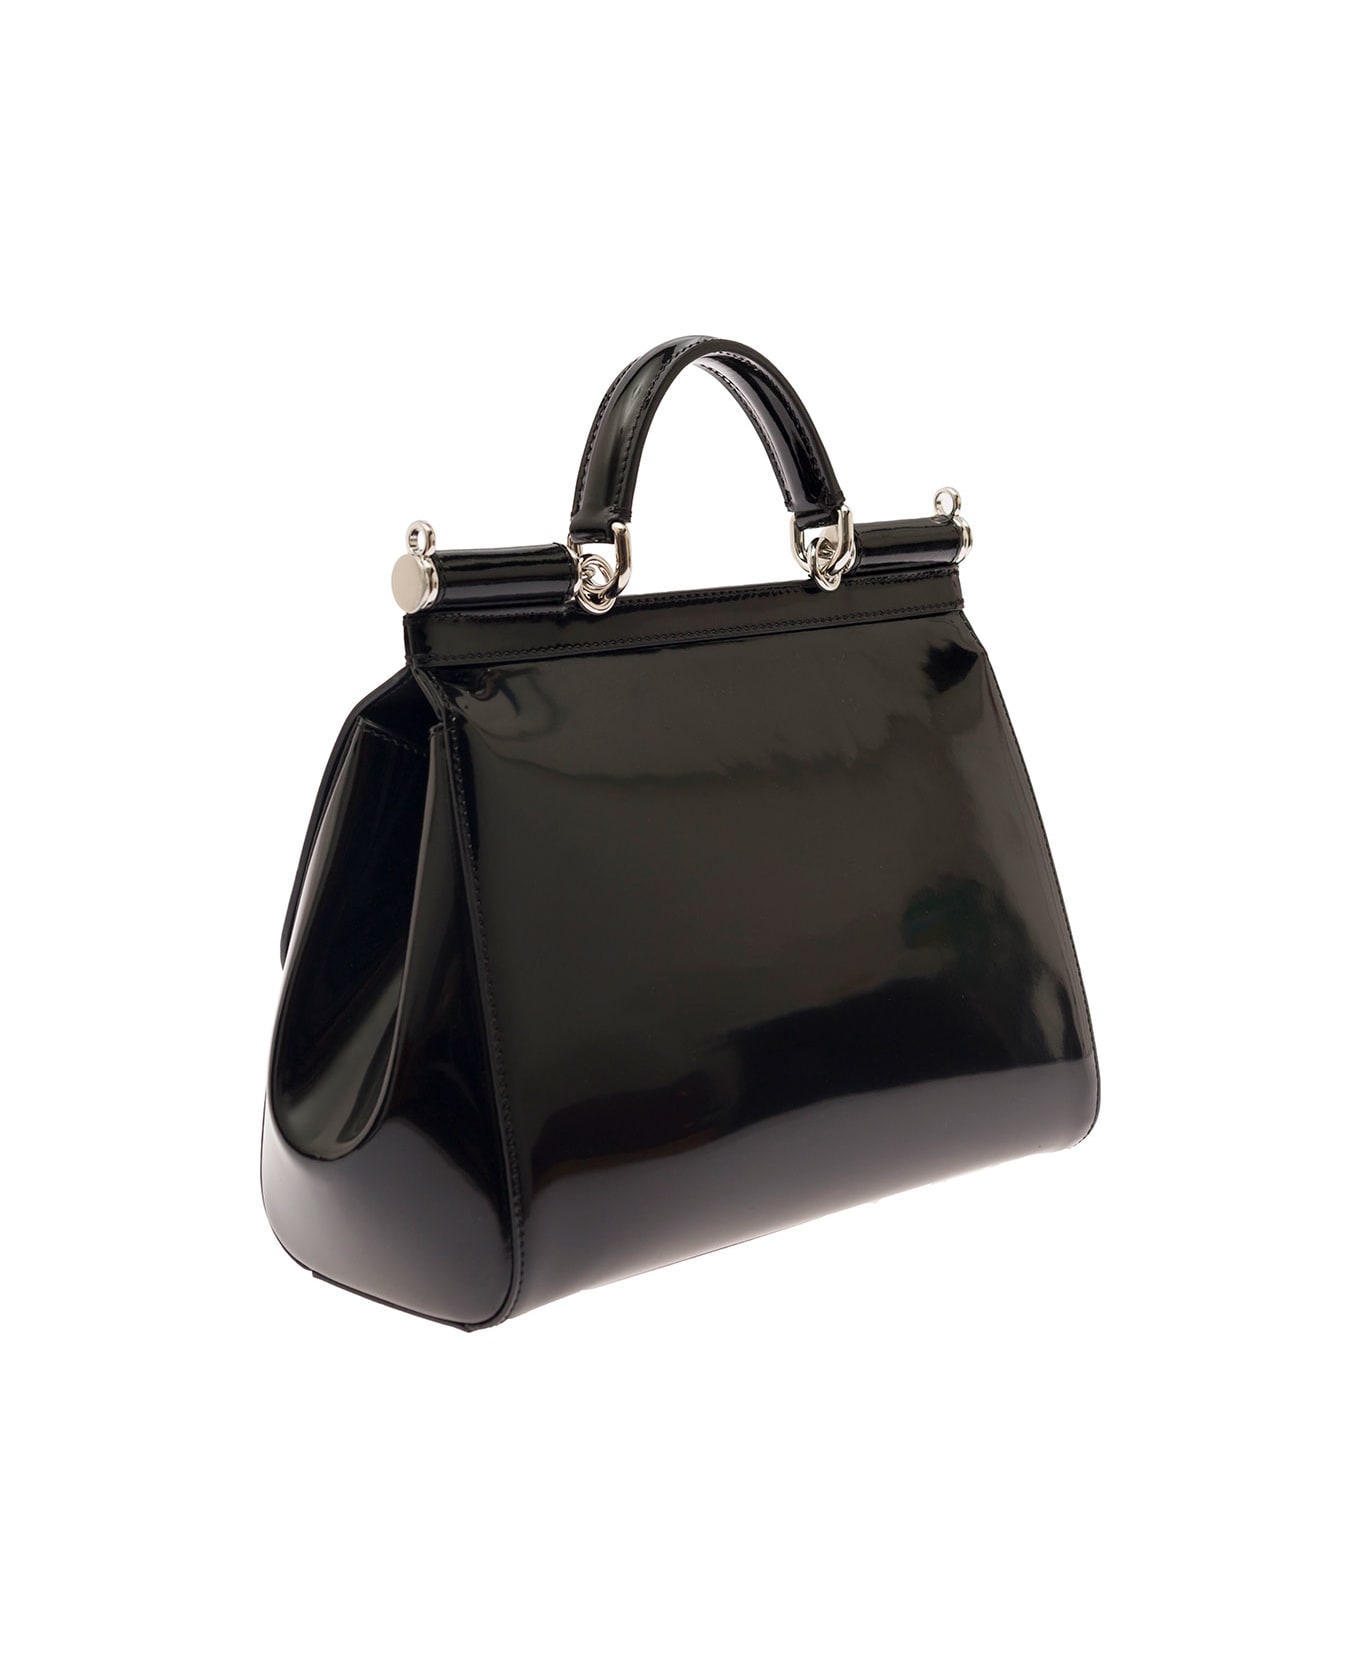 Dolce & Gabbana Black Sicily Medium Handbag In Shiny Leather Woman - Black